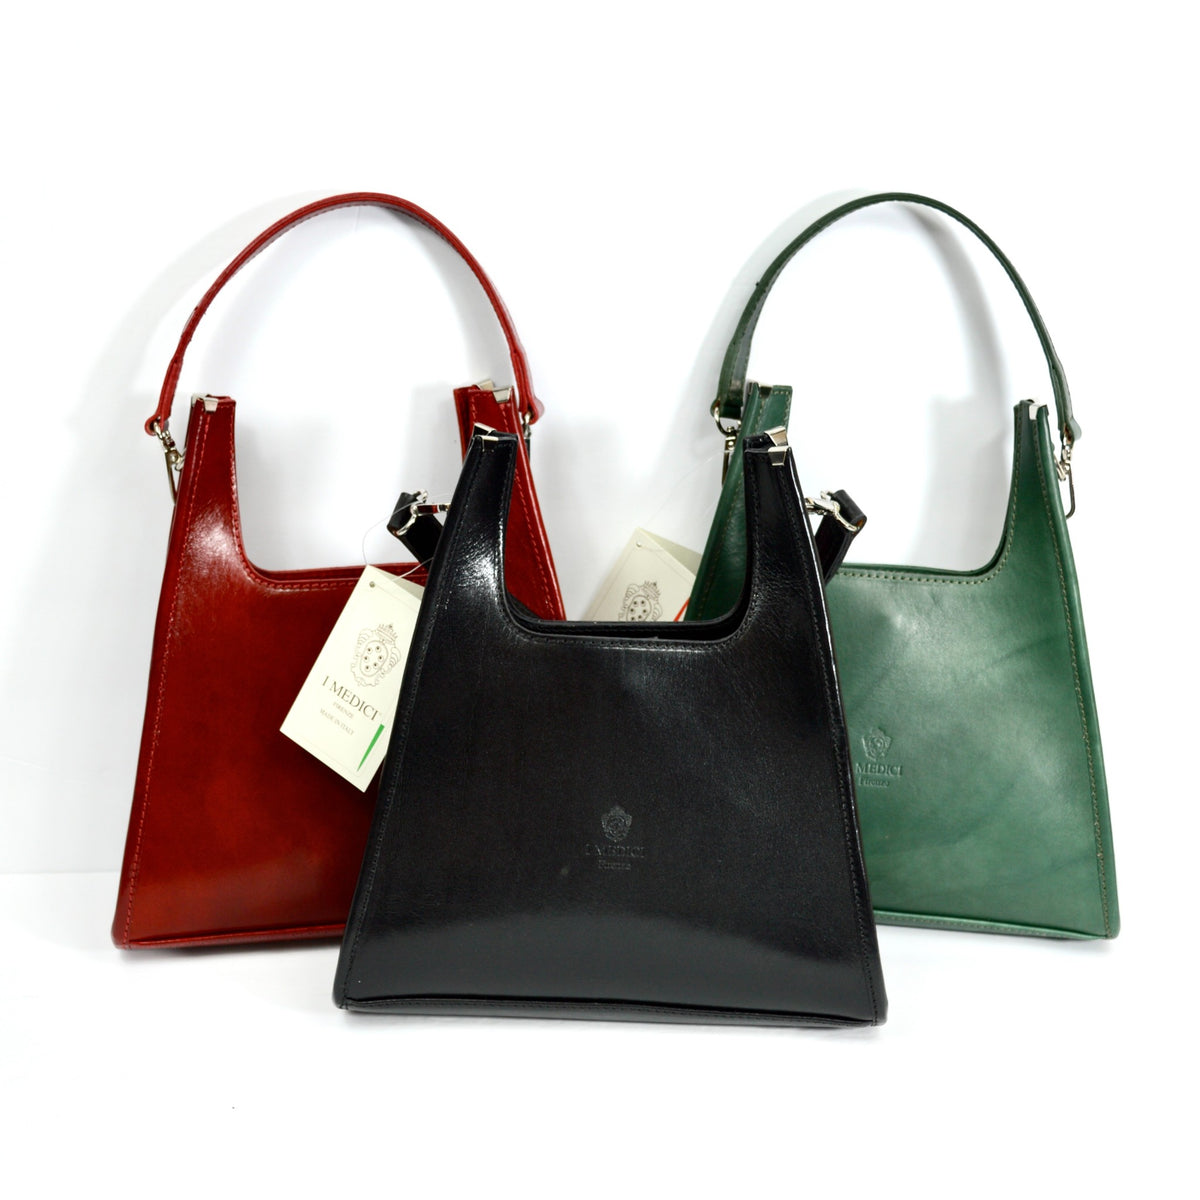 Bari Italian Leather Handbag with detachable strap, Made in Italy - My Italian Decor